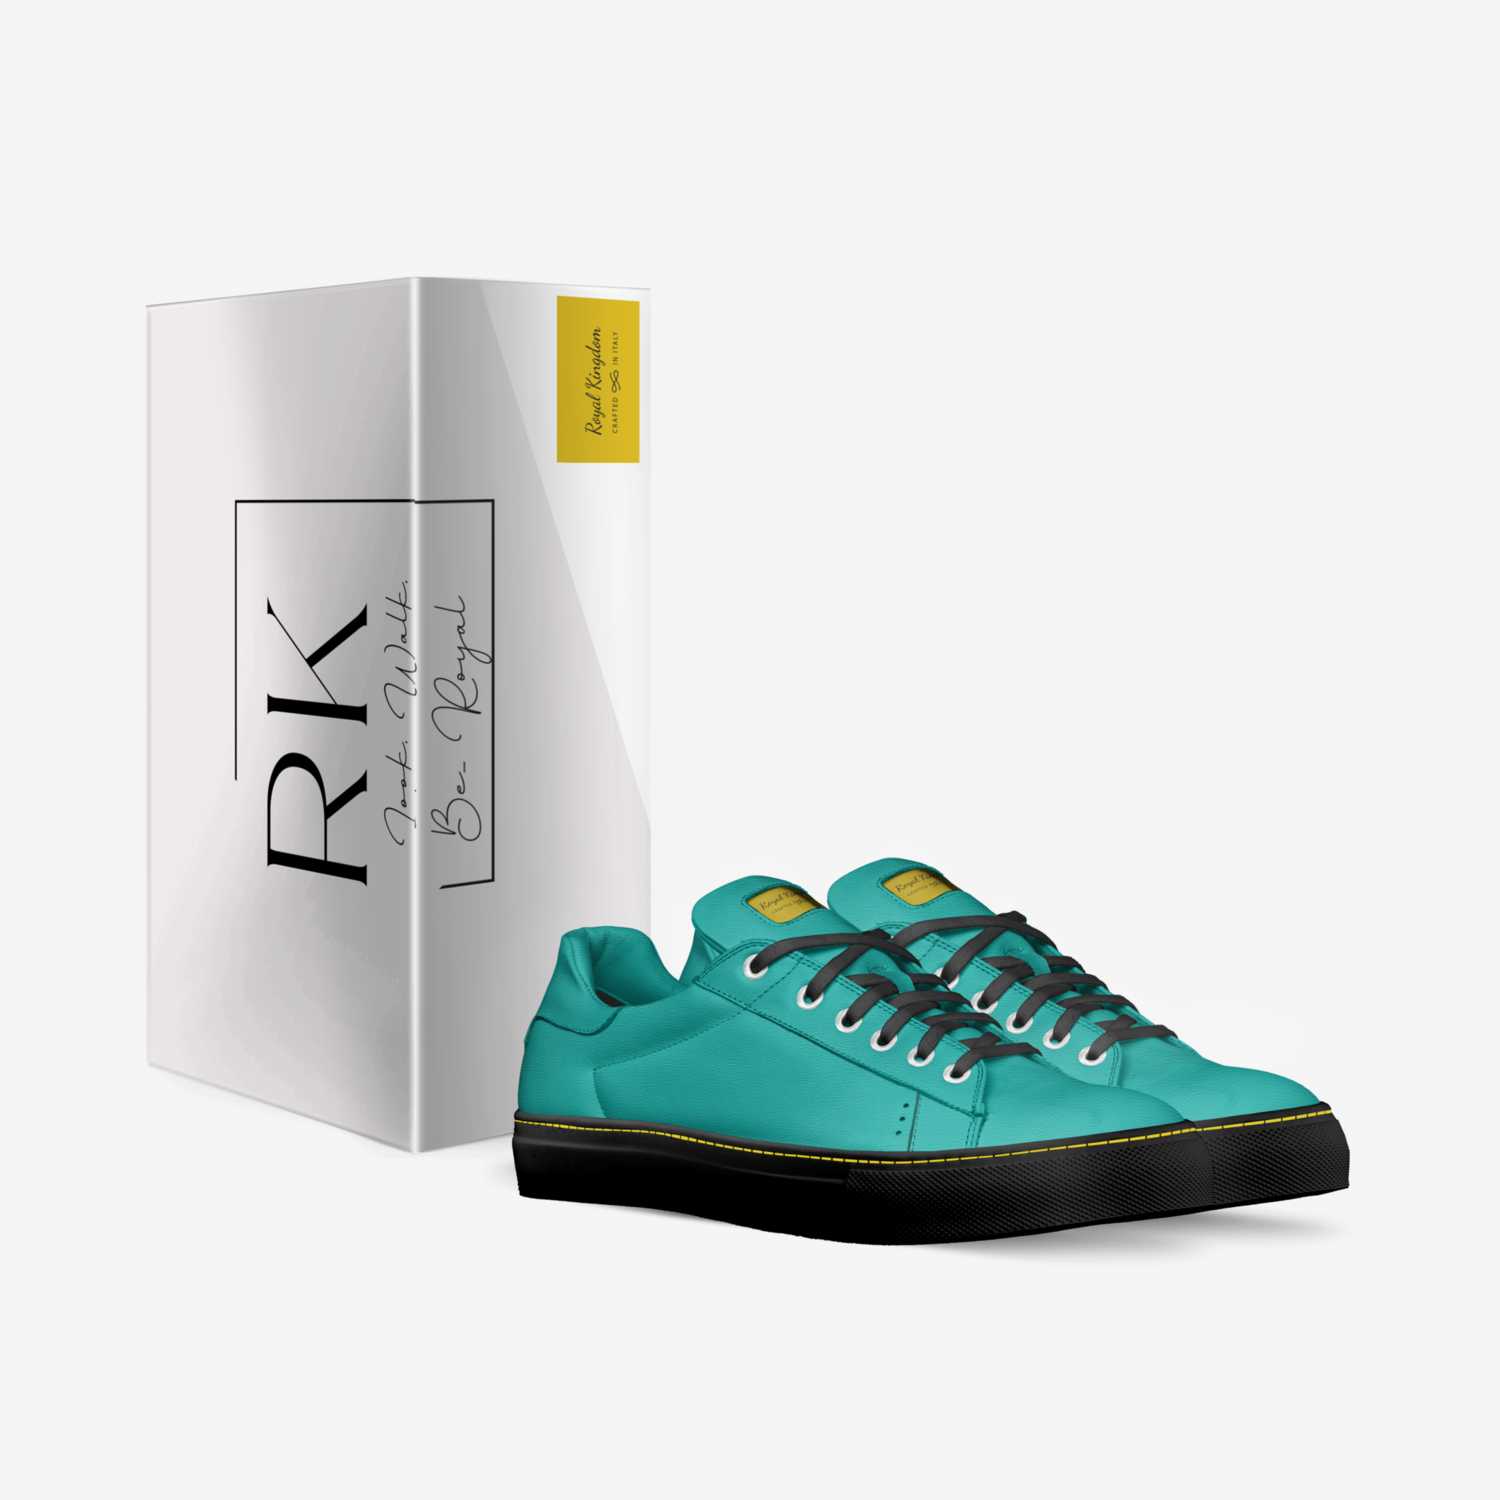 Royal Kingdom custom made in Italy shoes by Rauh Karim | Box view